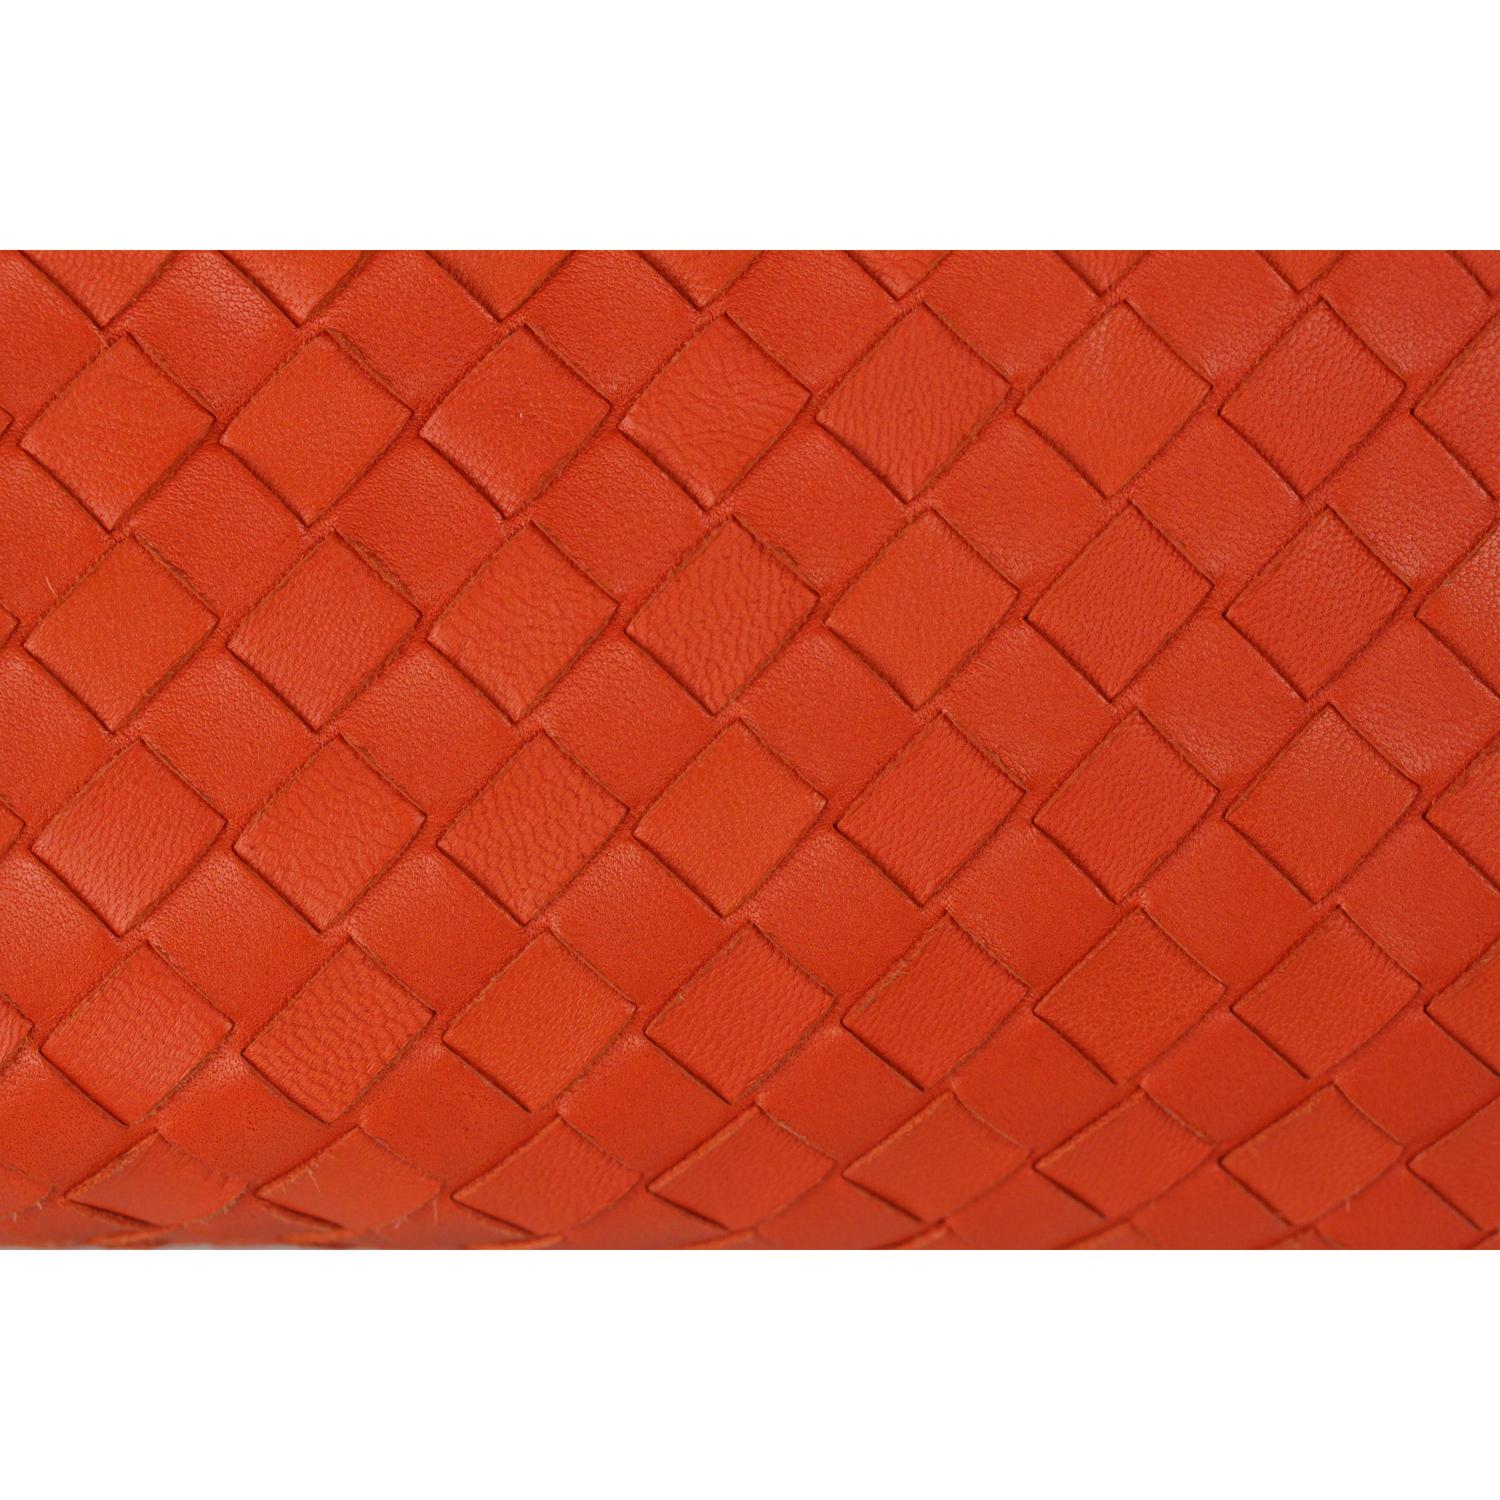 Bottega Veneta Orange Intrecciato Woven Leather Bowling Bag 2